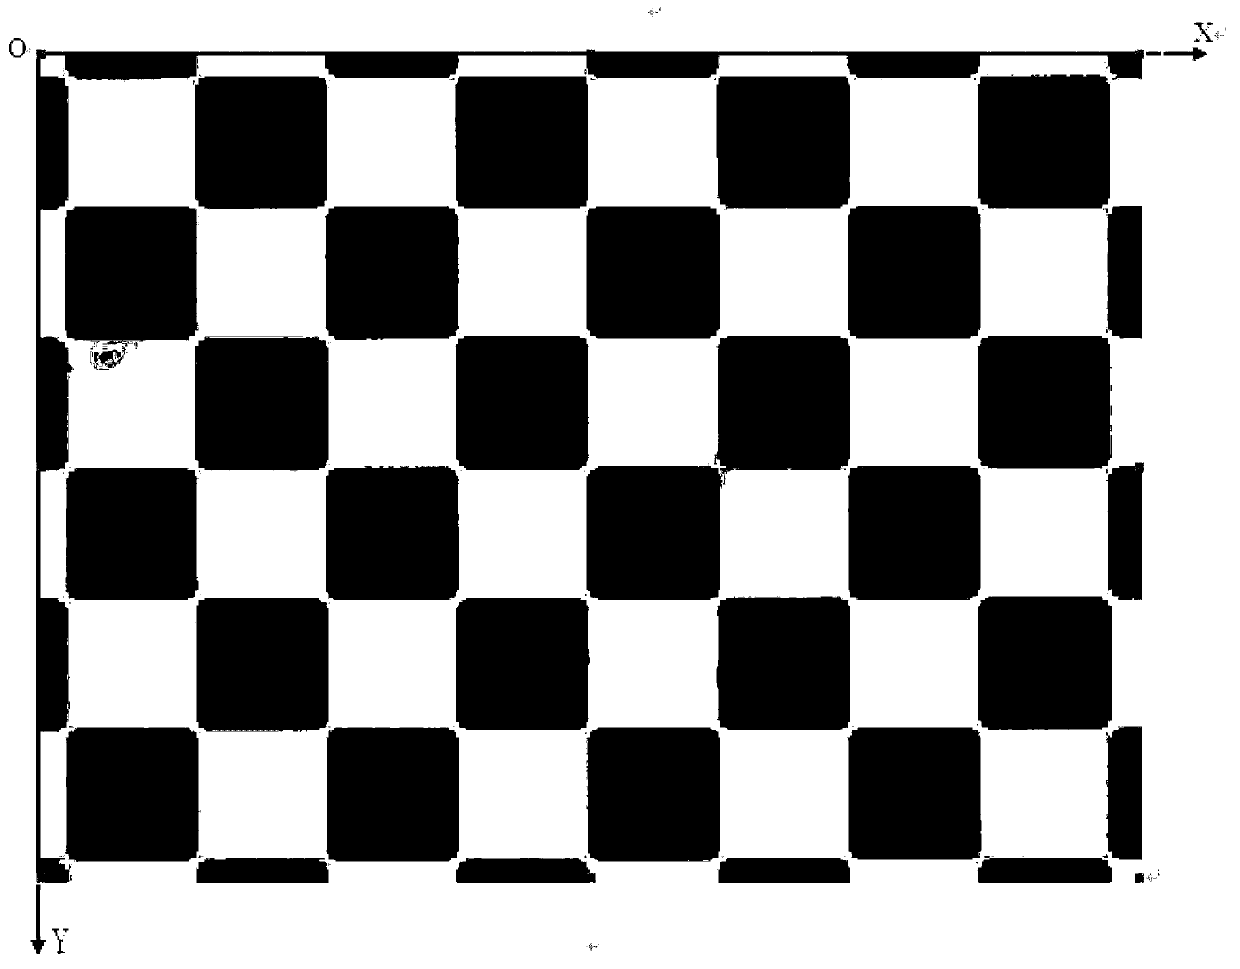 Chessboard angular point sub-pixel extraction method based on Harris operator